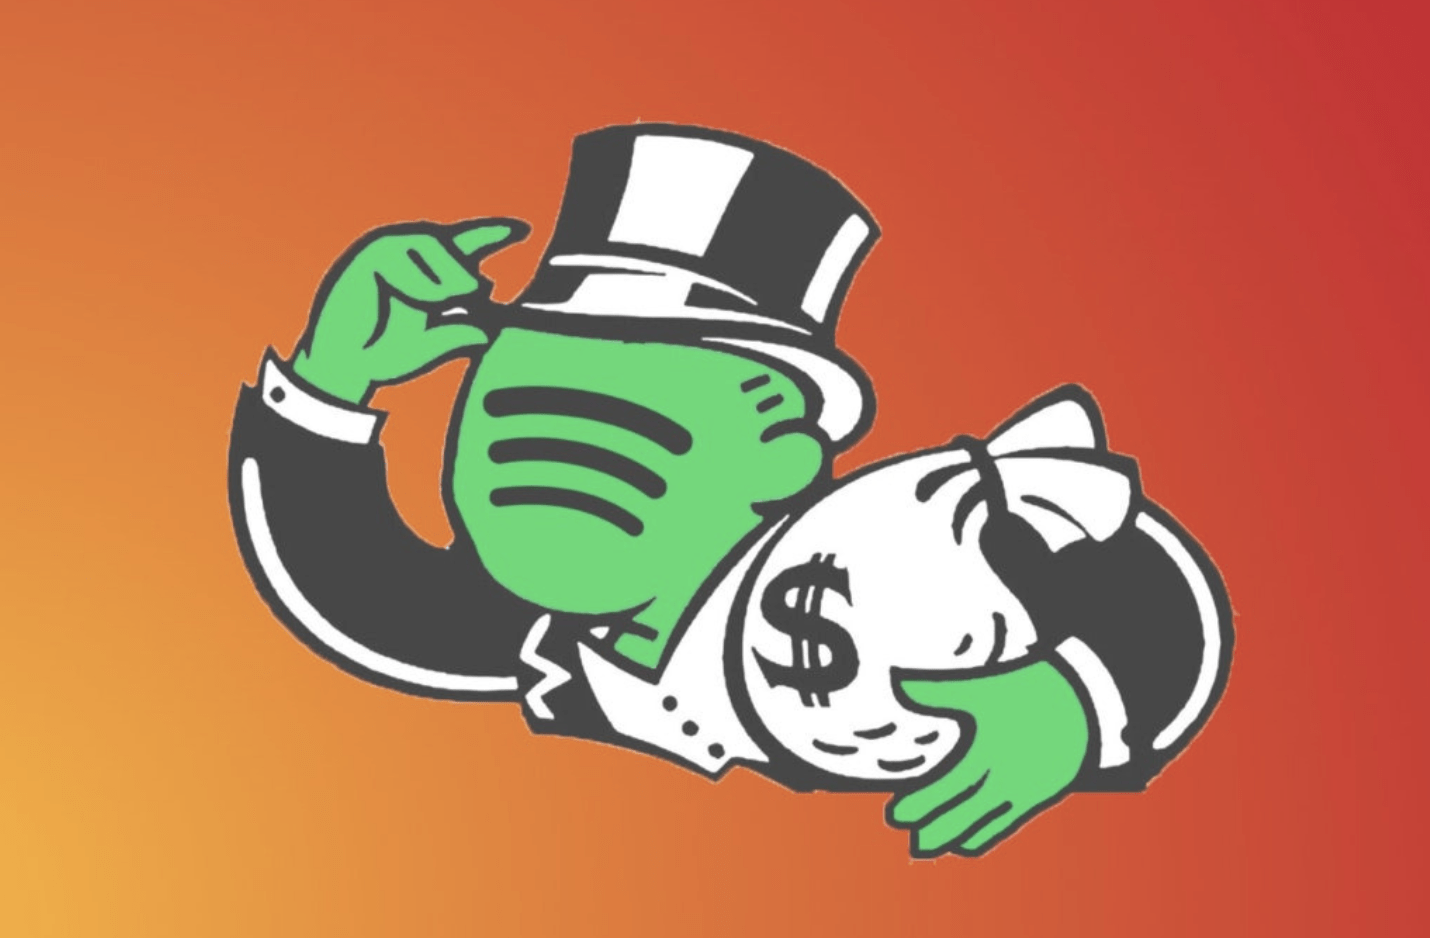 Artists Enraged: Unfair Spotify Practices